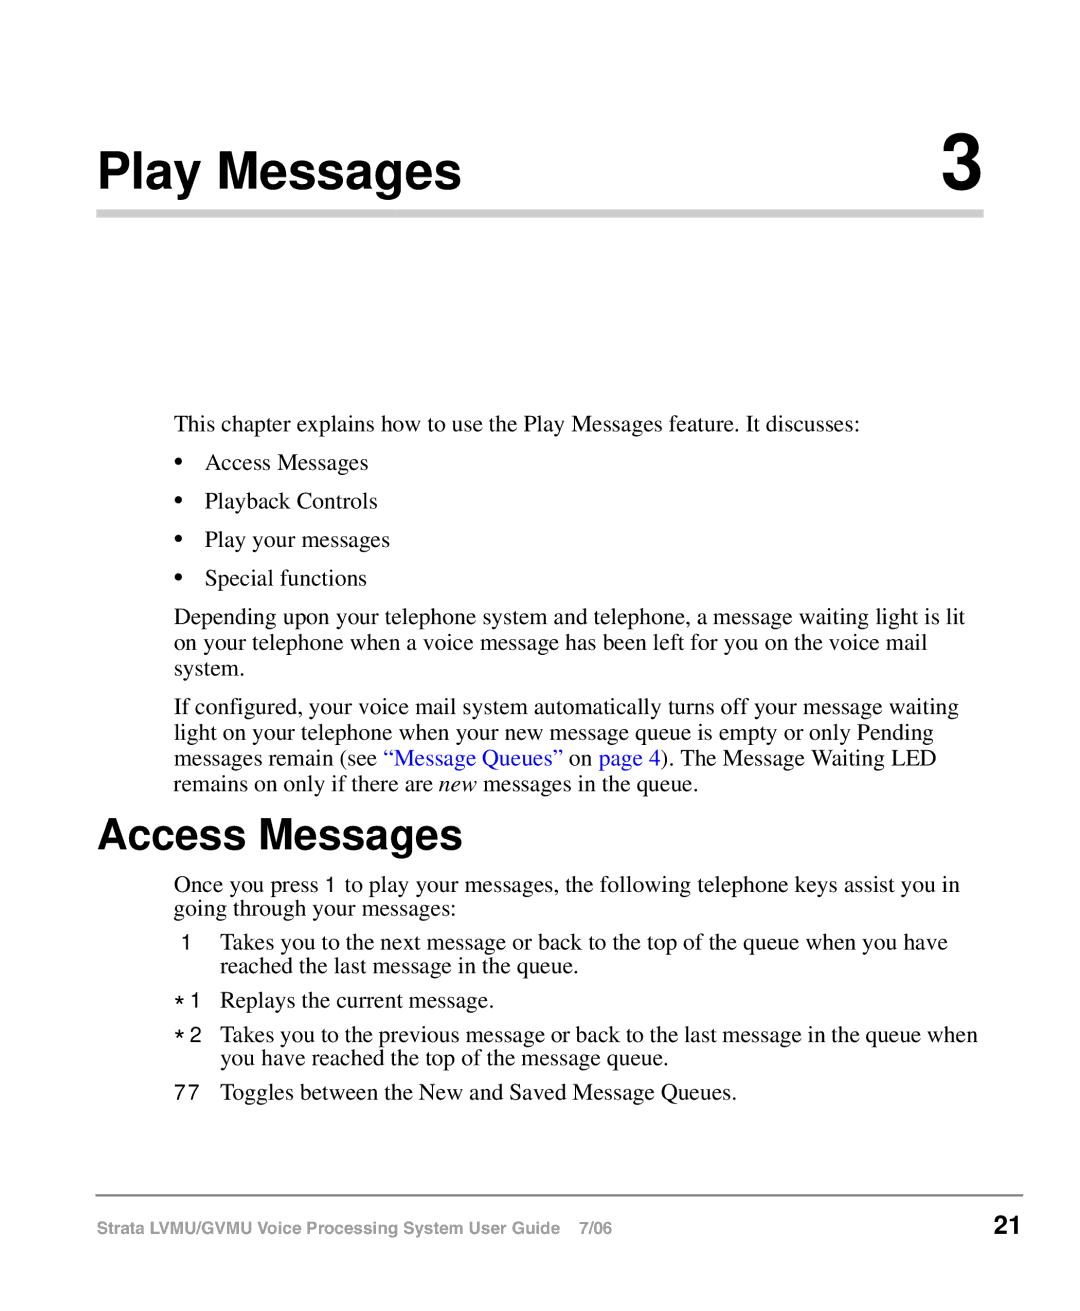 Toshiba GVMU/LVMU manual Play Messages, Access Messages 